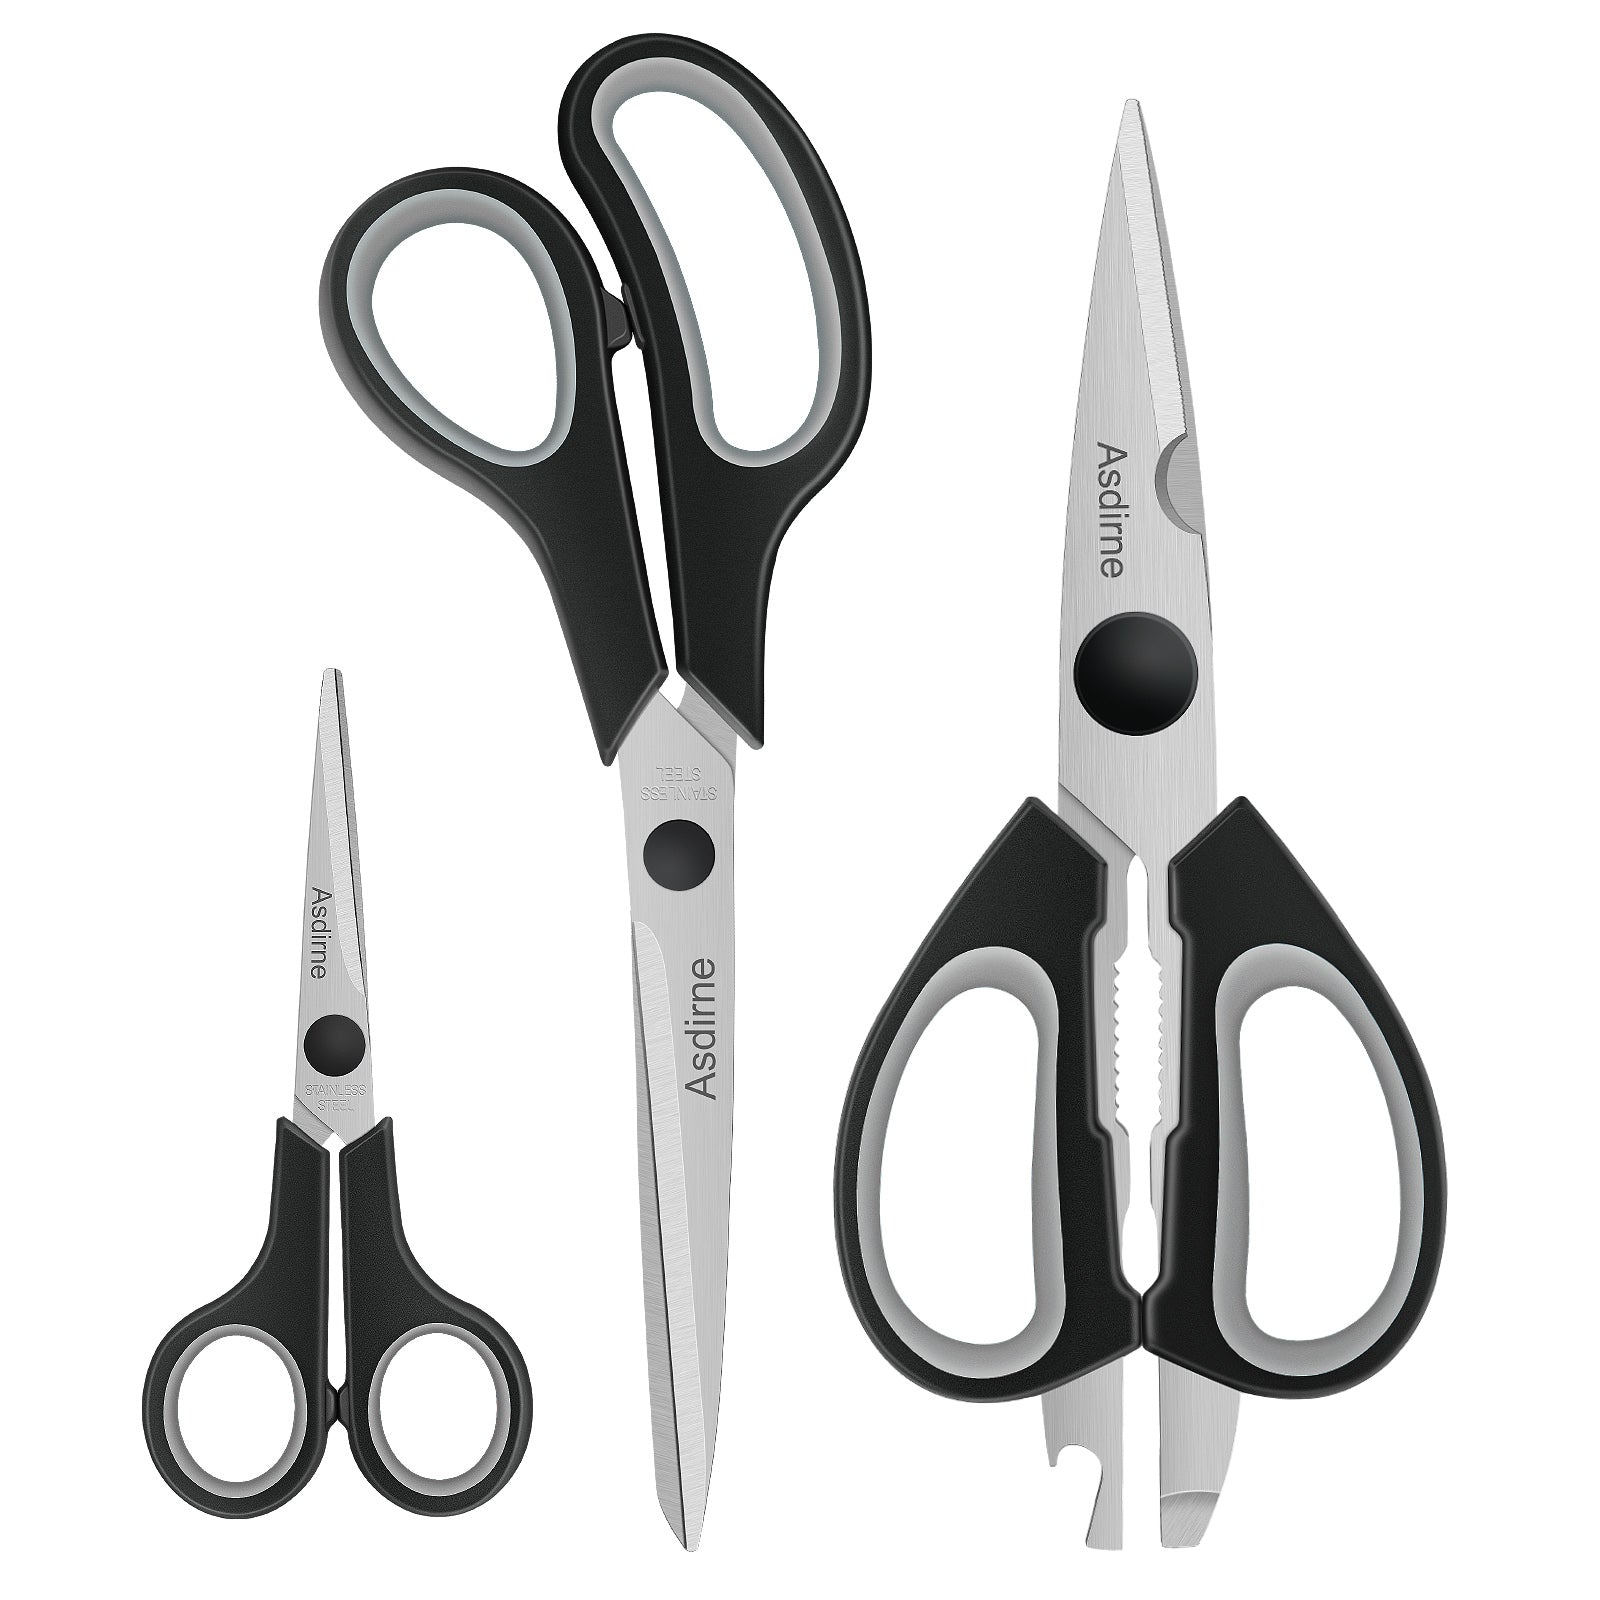 Asdirne Multi-purpose Kitchen Scissors Bundle of 3